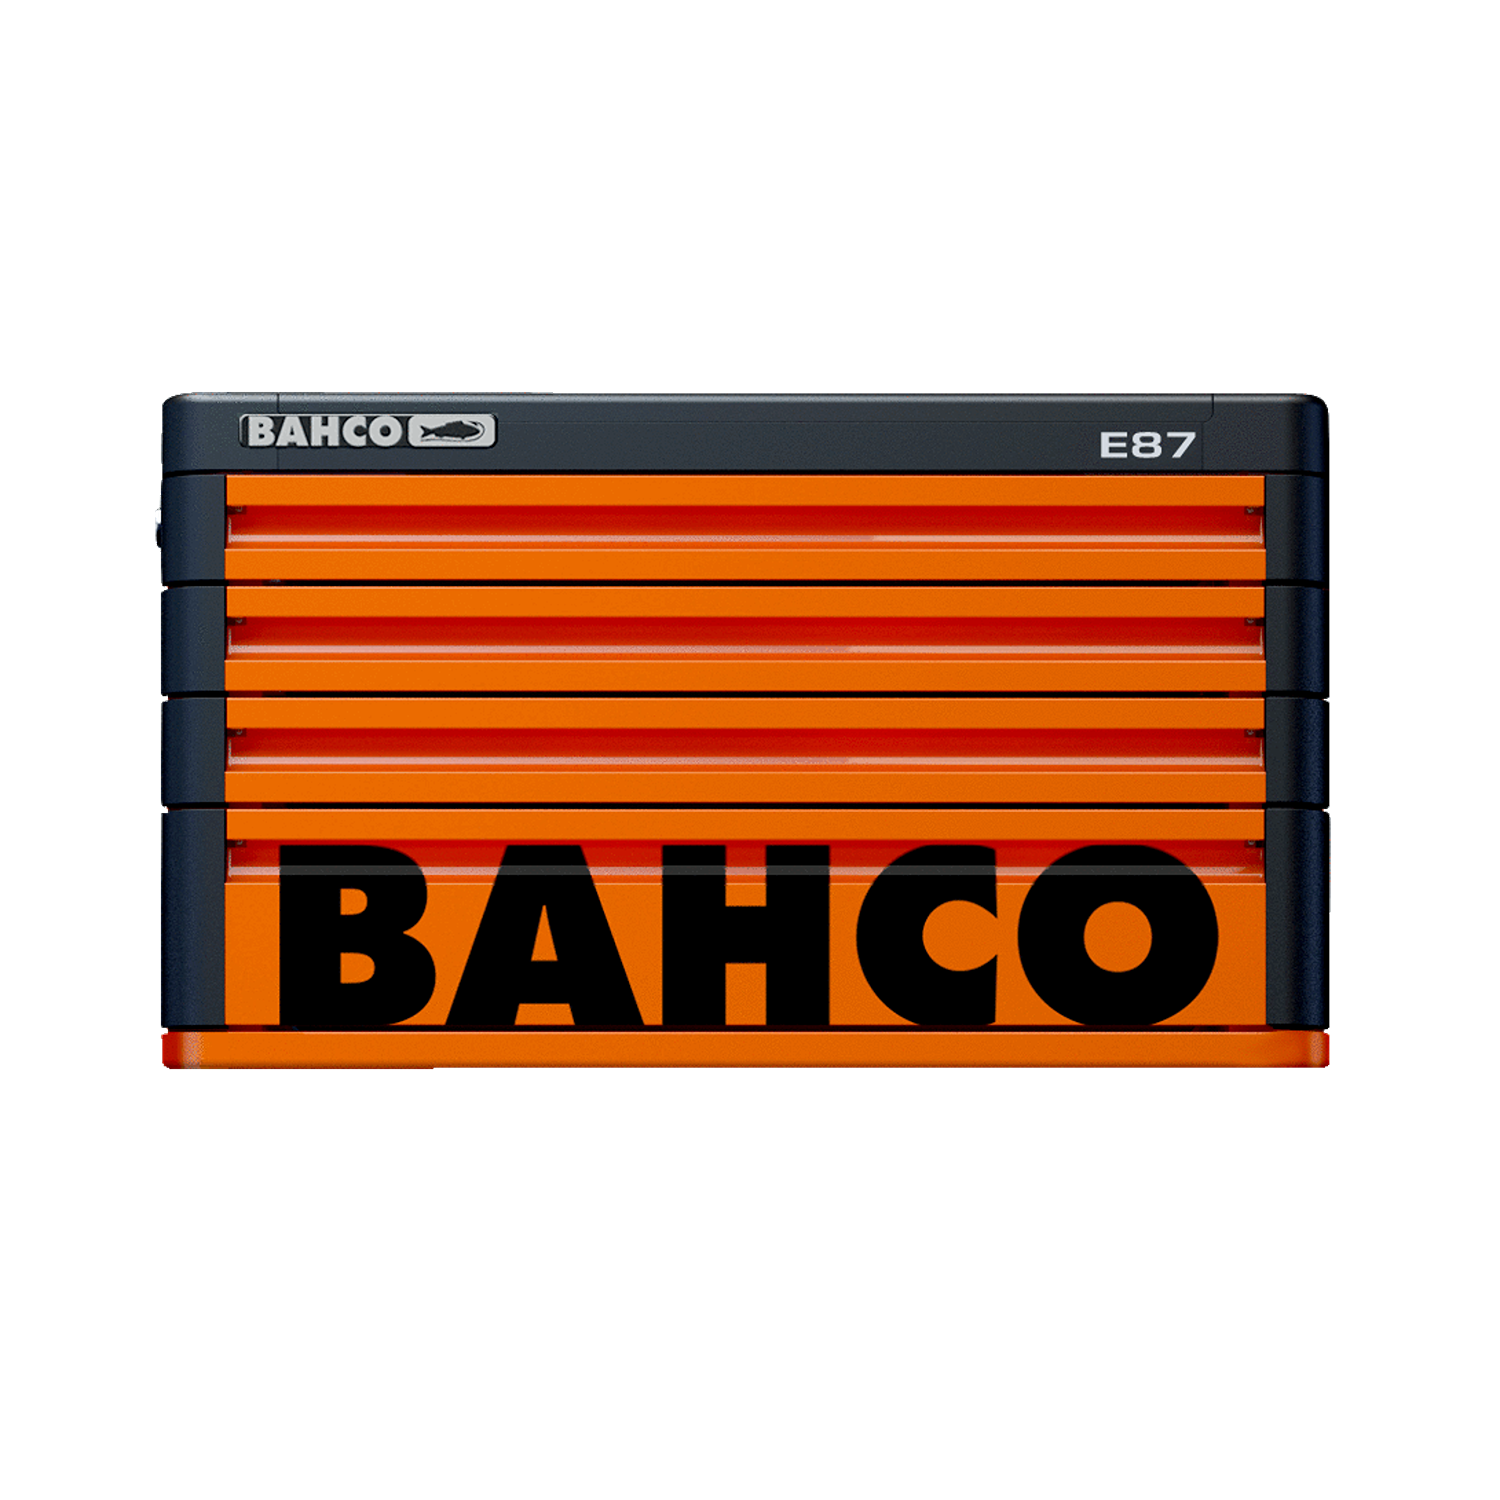 BAHCO 1487K4 Premium E87 Storage HUB Top Chests with 4-Drawers - Premium Storage HUB from BAHCO - Shop now at Yew Aik.